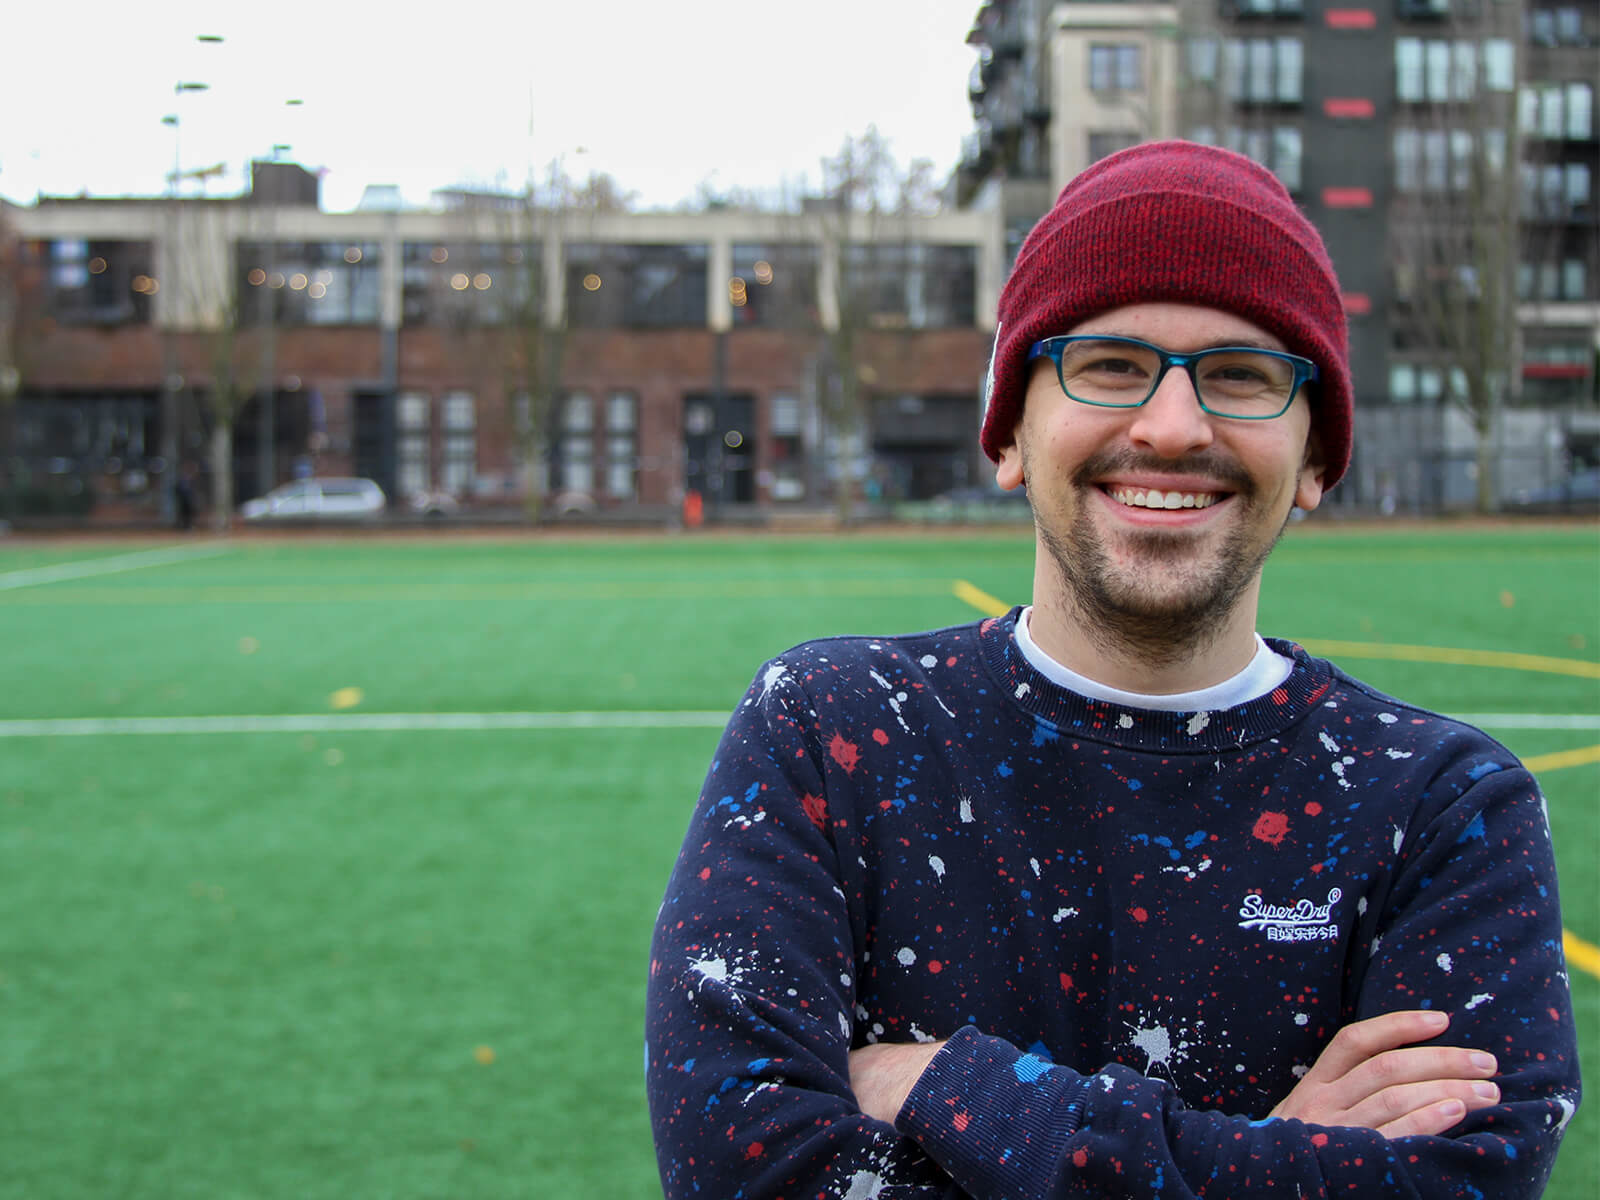 DigiPen game design graduate Logan Fieth smiles for the camera in Seattle’s Cal Anderson Park.